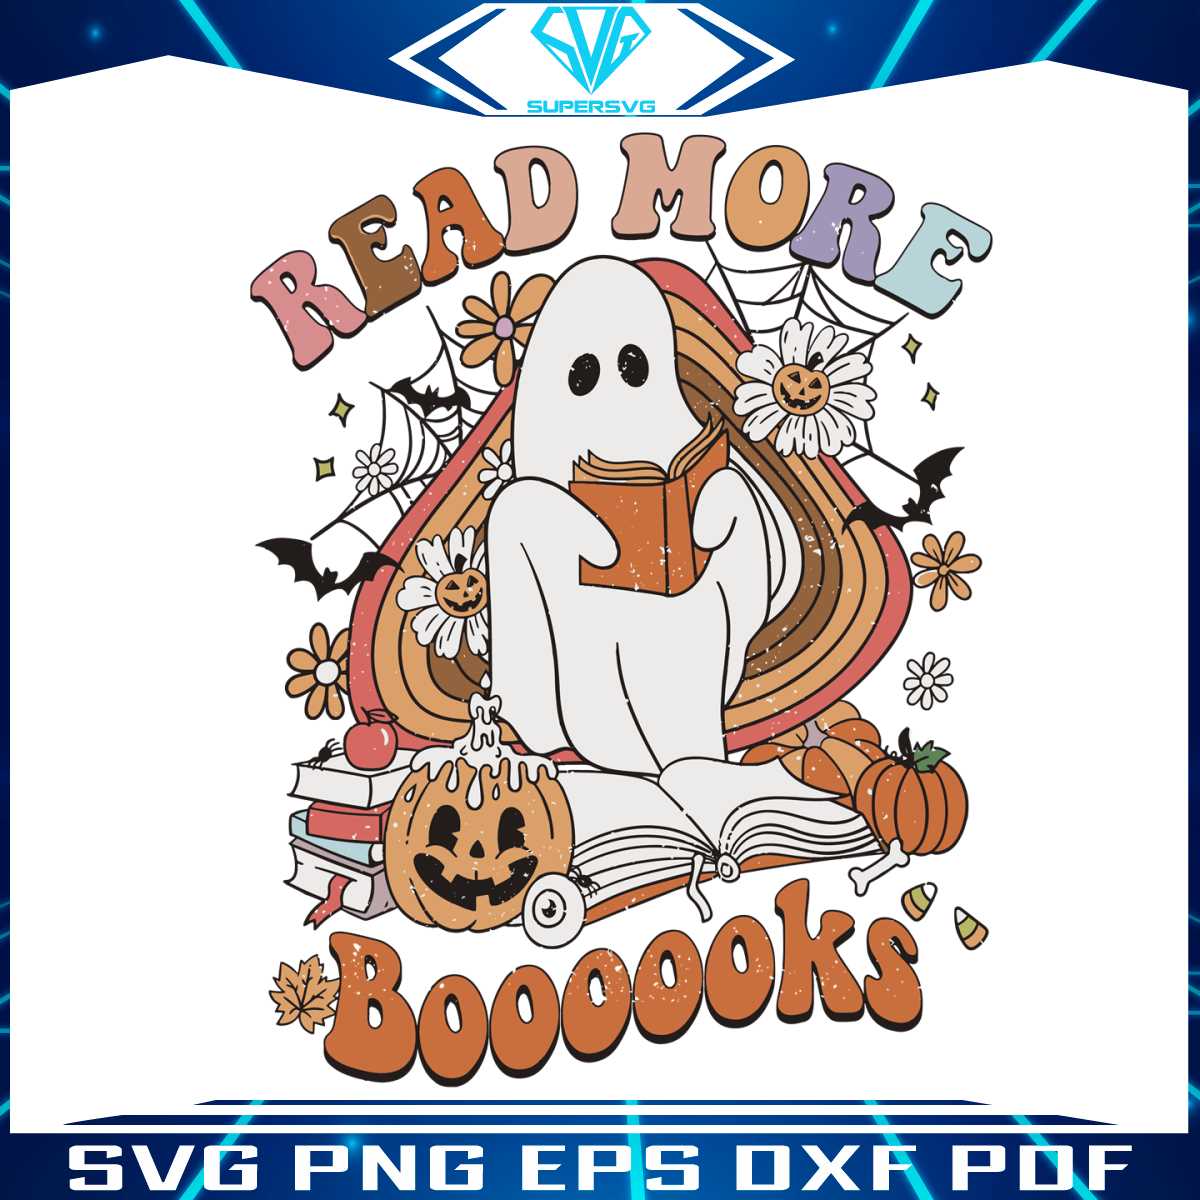 retro-read-more-booooks-halloween-ghost-svg-cutting-file